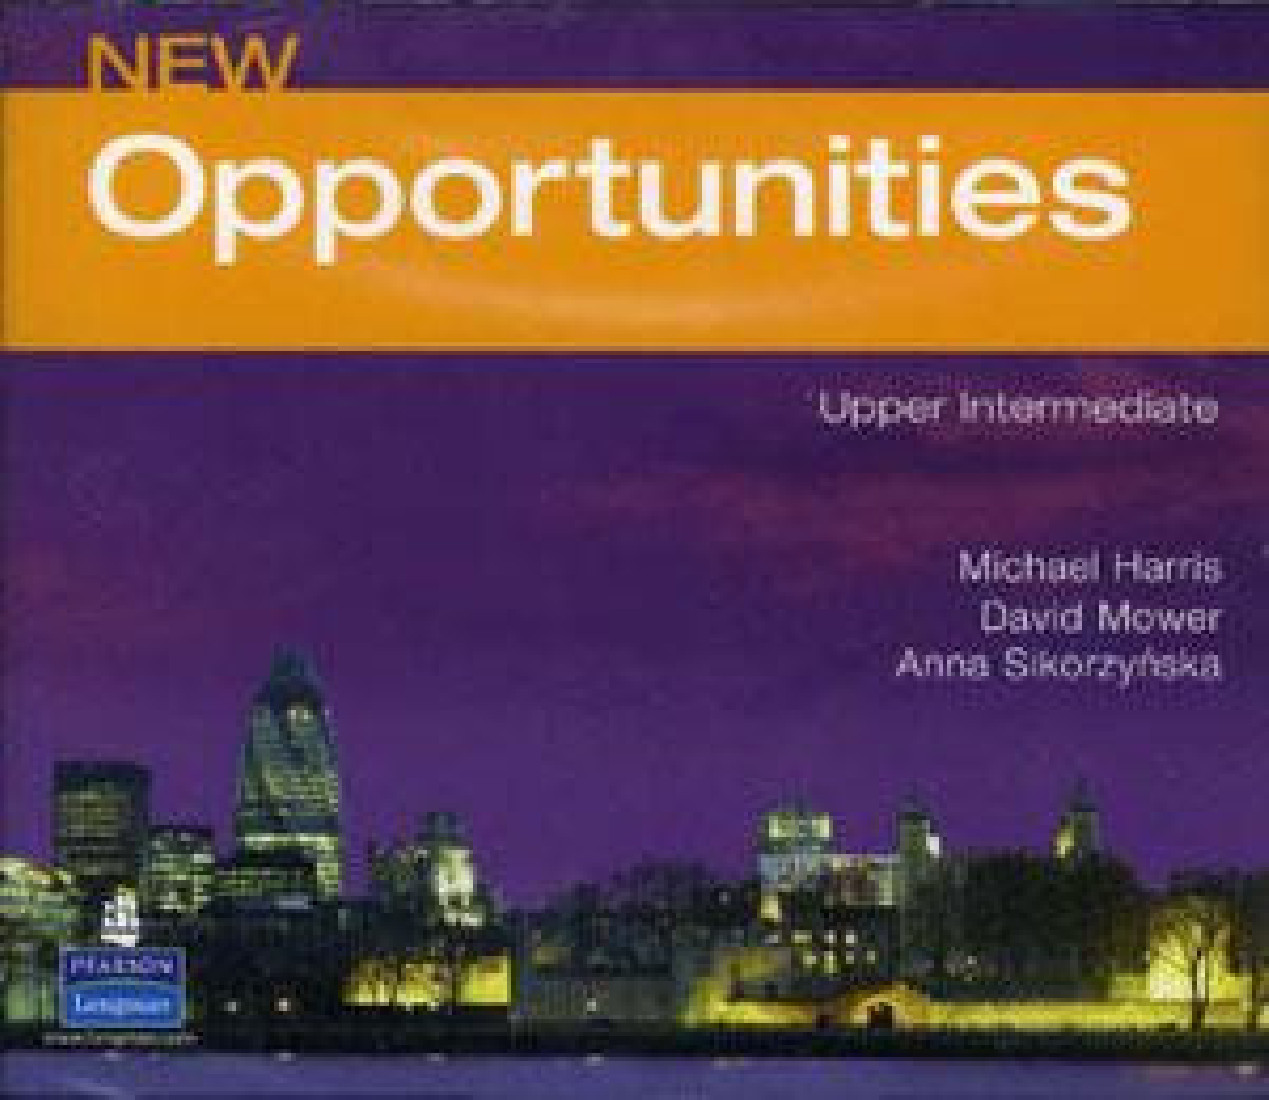 Life upper intermediate. Opportunities Upper Intermediate. Учебник New opportunities. New opportunities Intermediate. Intermediate Upper Intermediate.